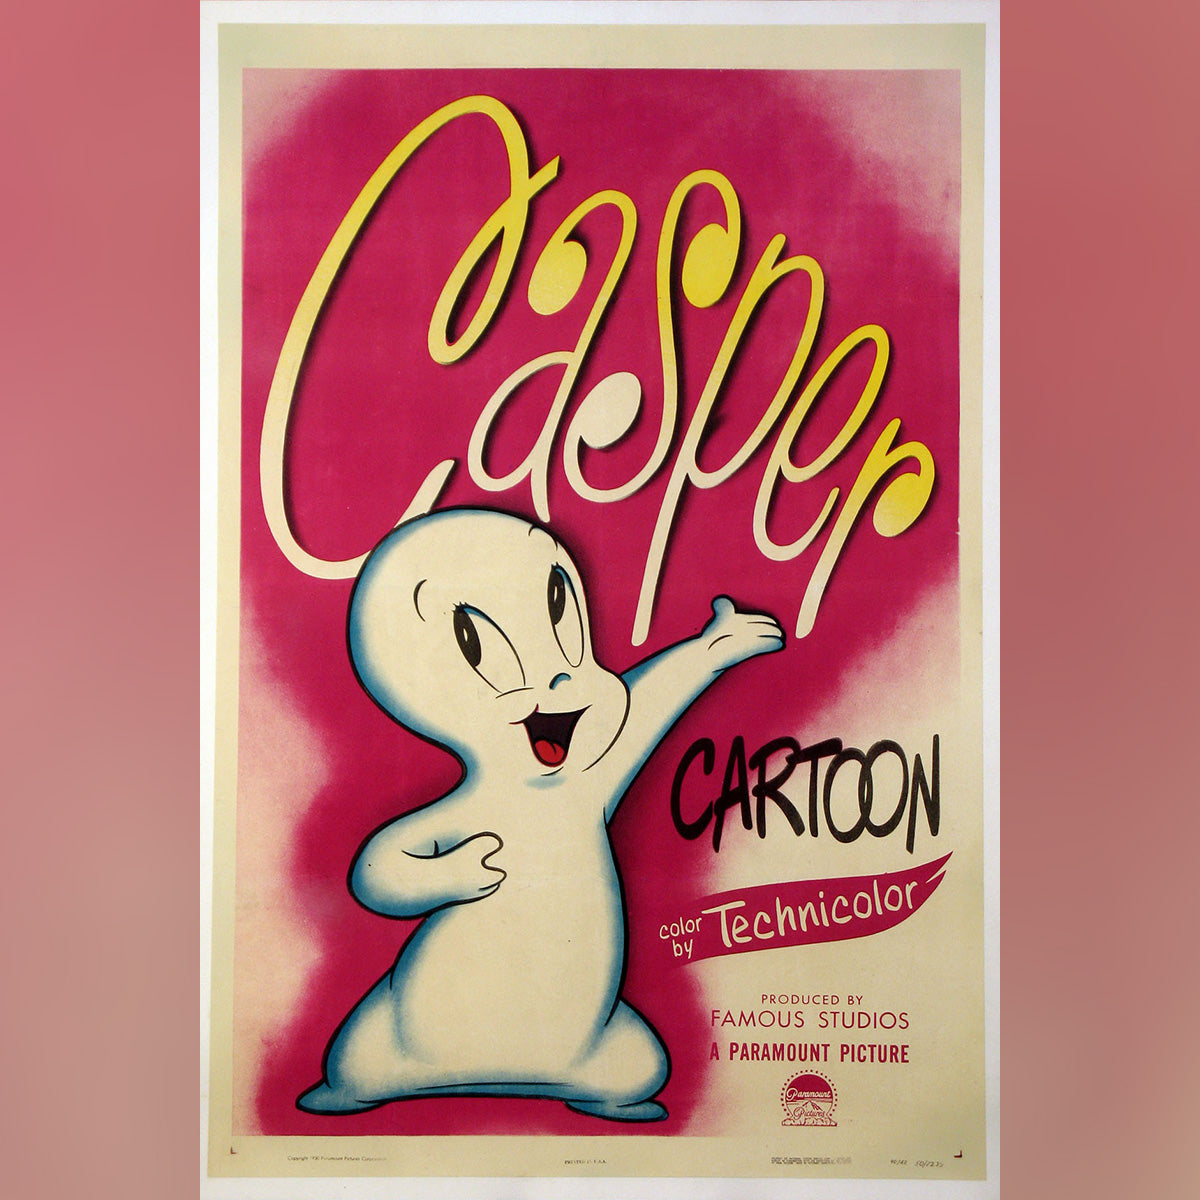 Original Movie Poster of Casper (1950)